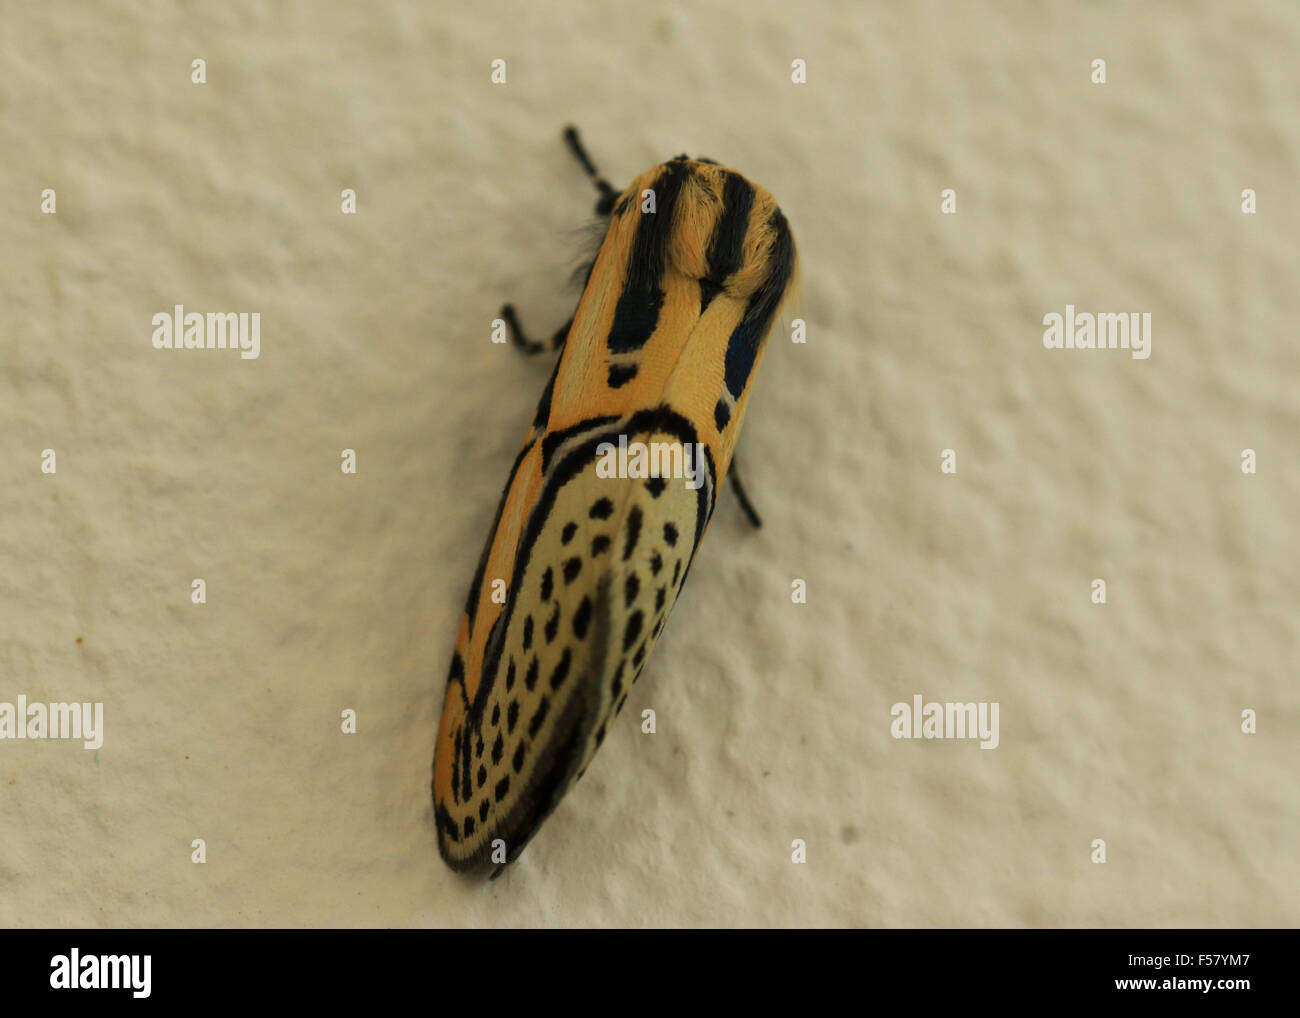 Yellow and black hieroglyphic moth found in Guanacaste, Costa Rica Stock Photo